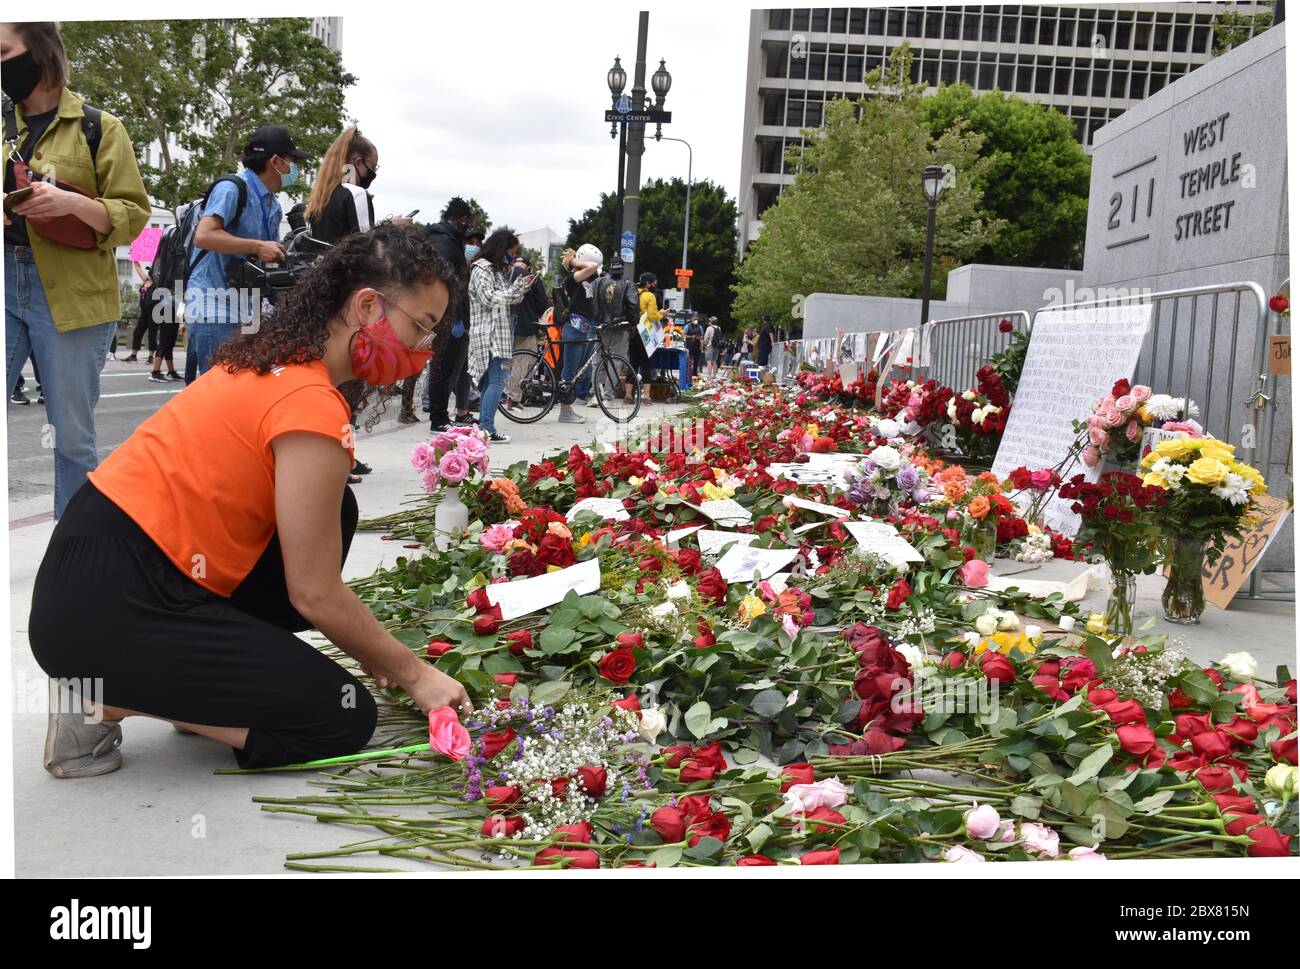 Los Angeles, USA. Juni 2020. Eine Frau würdigt George Floyd, indem sie am 5. Juni 2020 Blumen vor der Hall of Justice in Los Angeles, USA, legt. Kredit: Xinhua/Alamy Live News Stockfoto